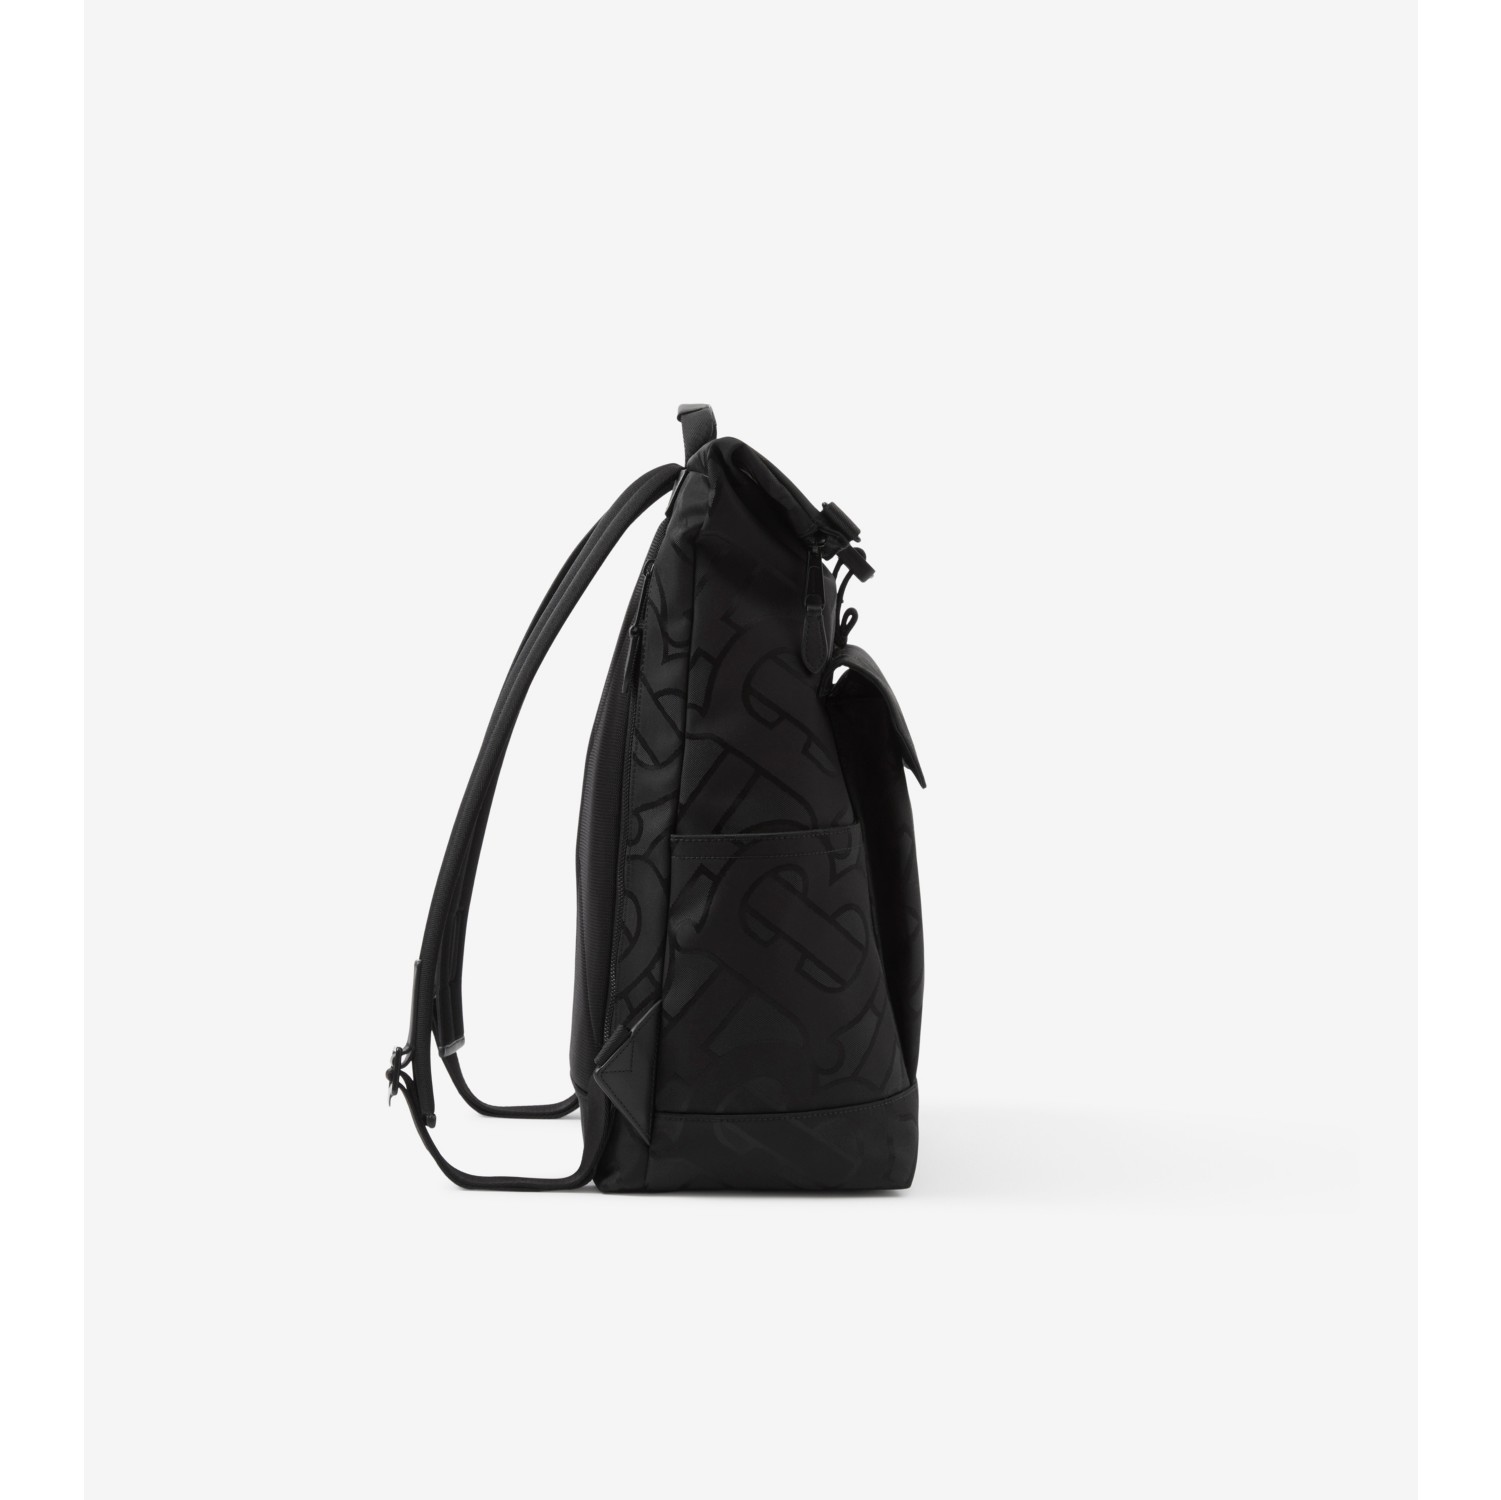 Burberry monogram jacquard backpack